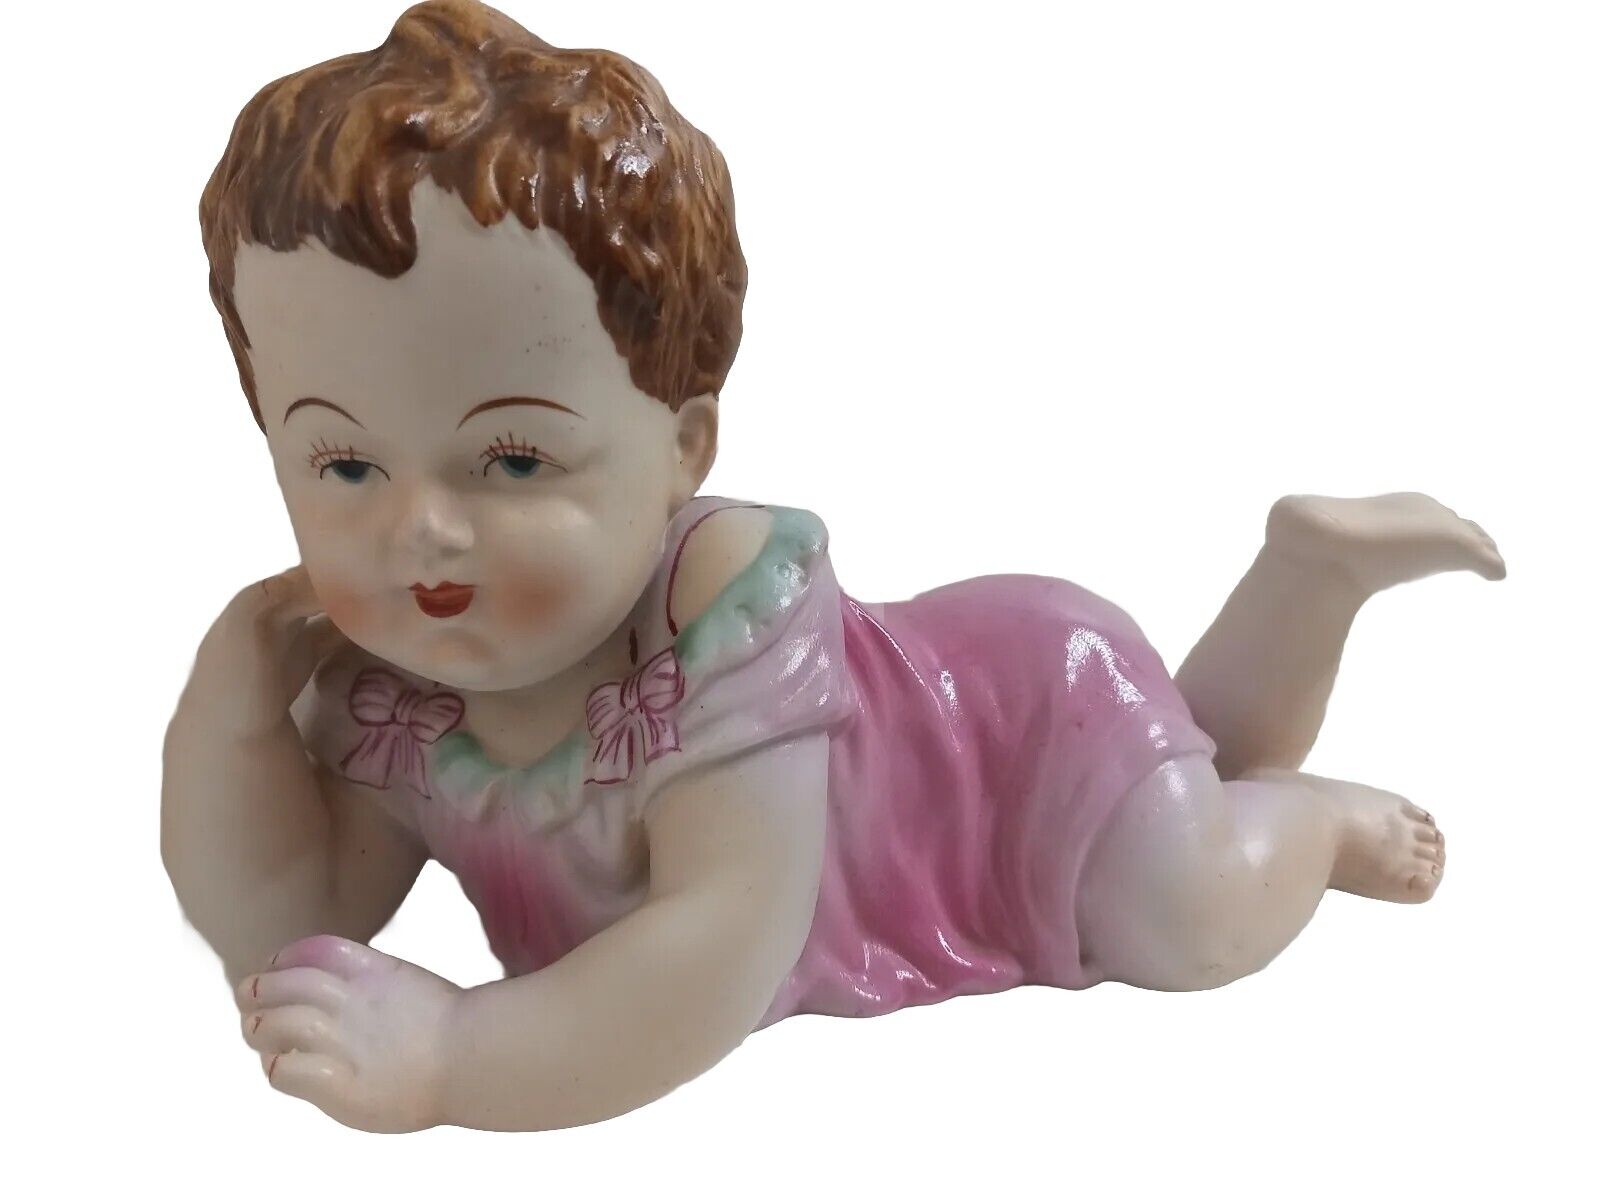 Vintage Antique German Crawling Piano Baby Porcelain Bisque Figure Figurine Girl